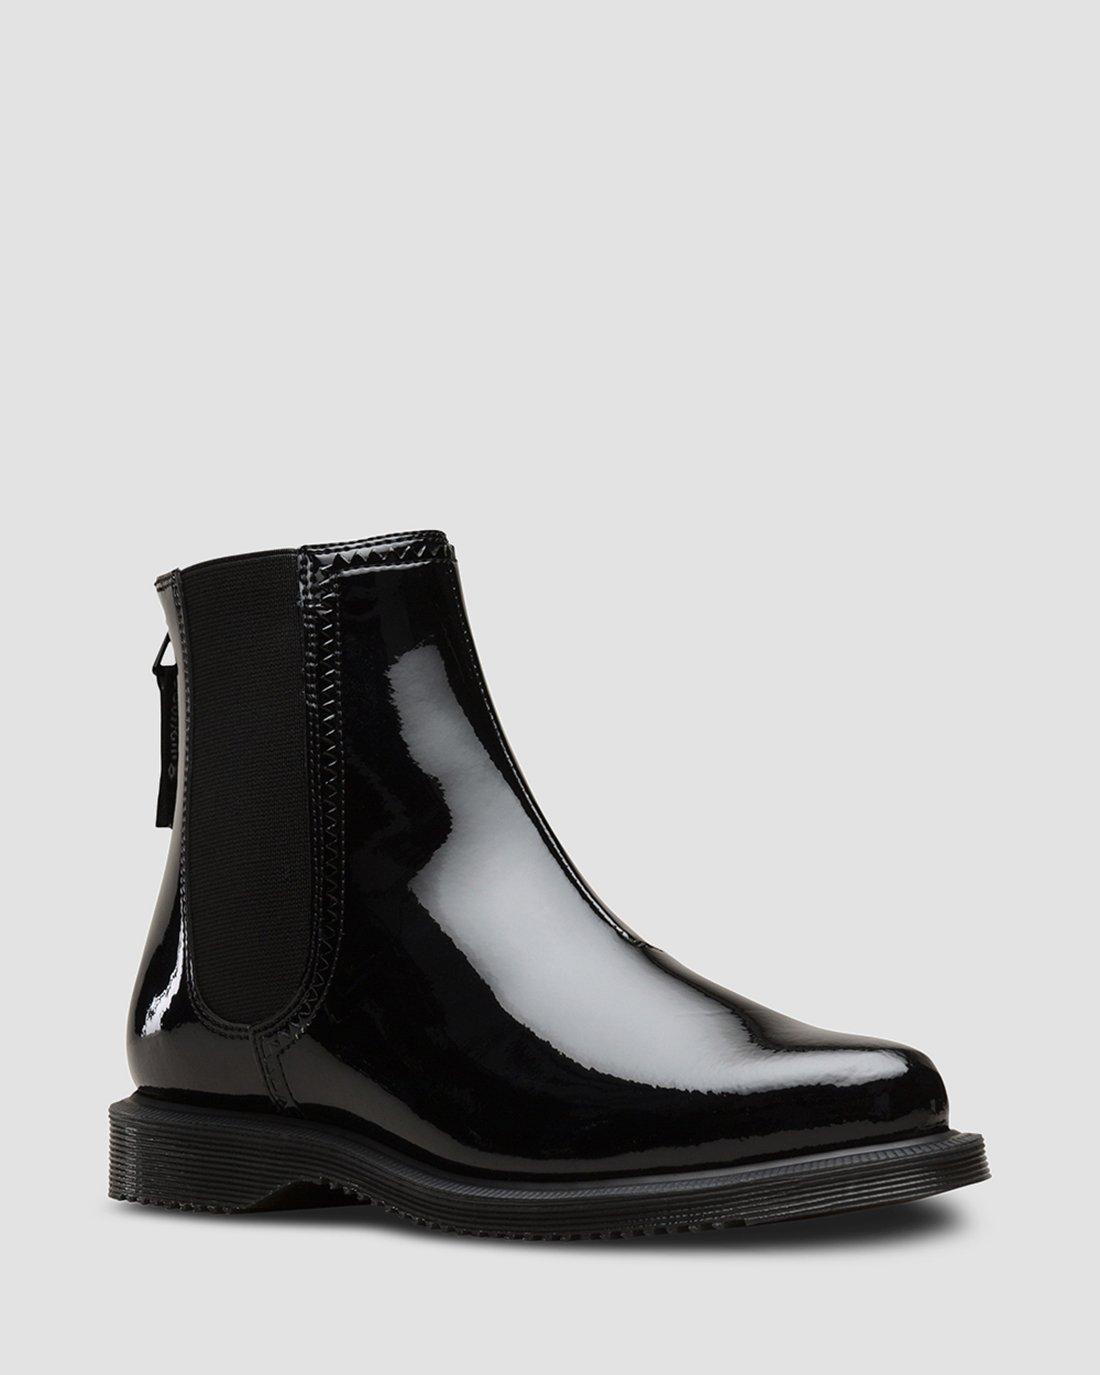 black patent chelsea boots uk